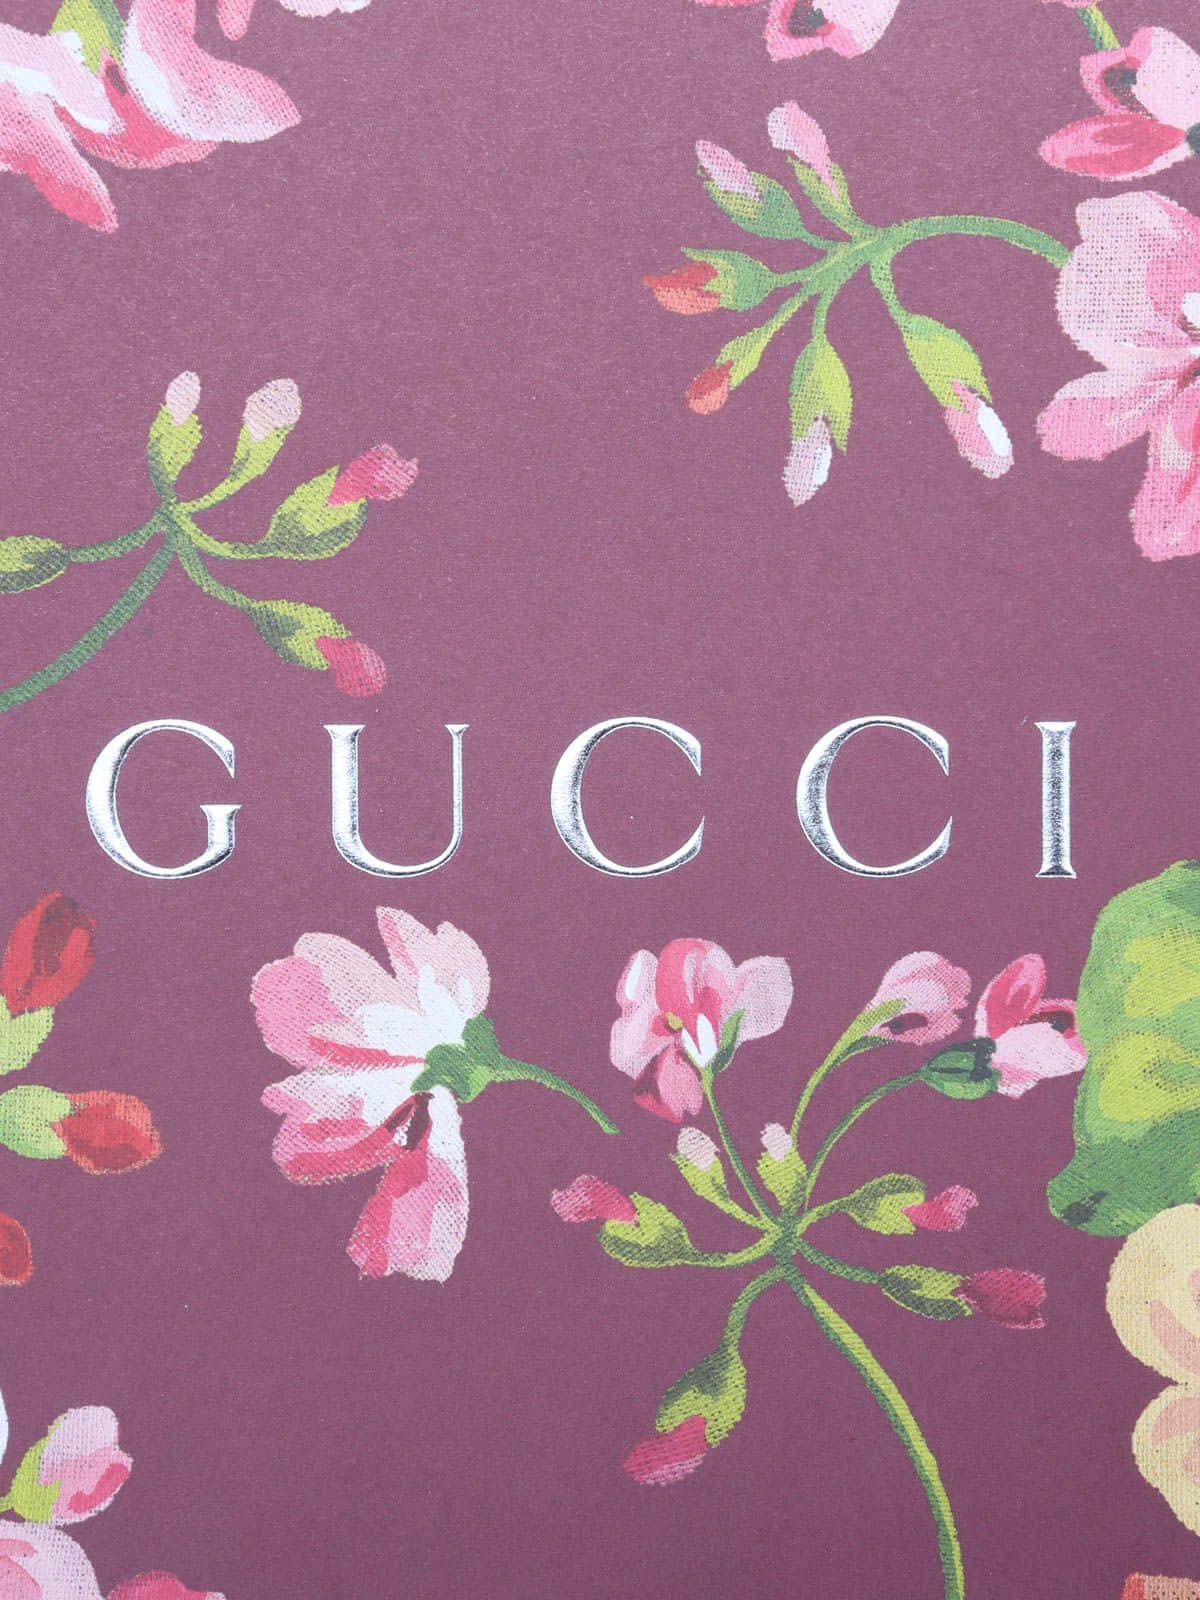 Free Purple Gucci Wallpaper Downloads, [100+] Purple Gucci Wallpapers for  FREE | Wallpapers.com